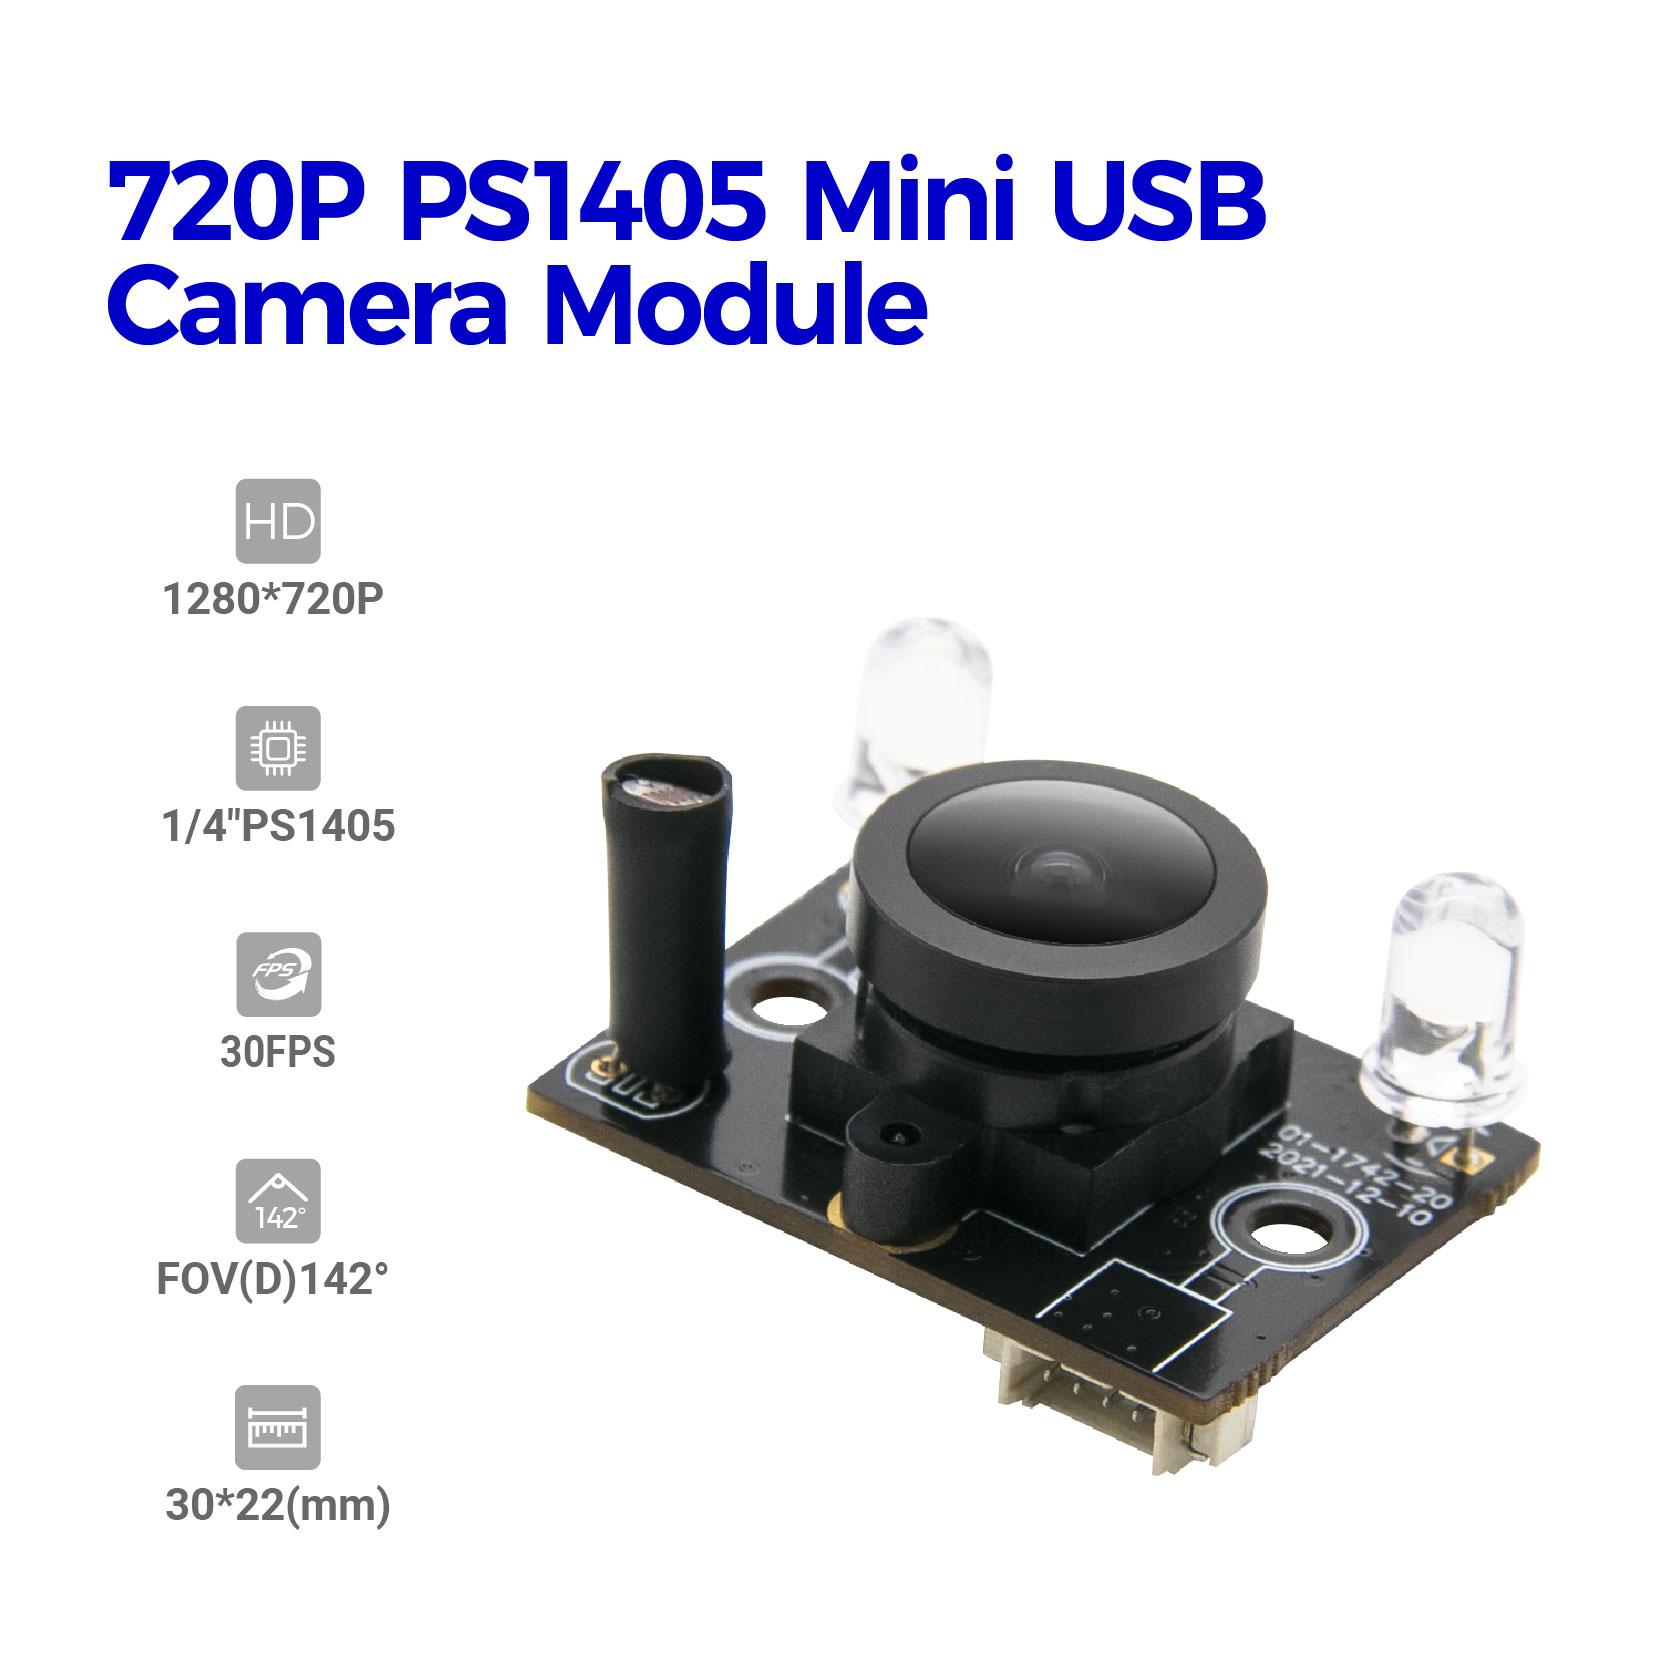 720P SP1405 Cost-effective Camera Module